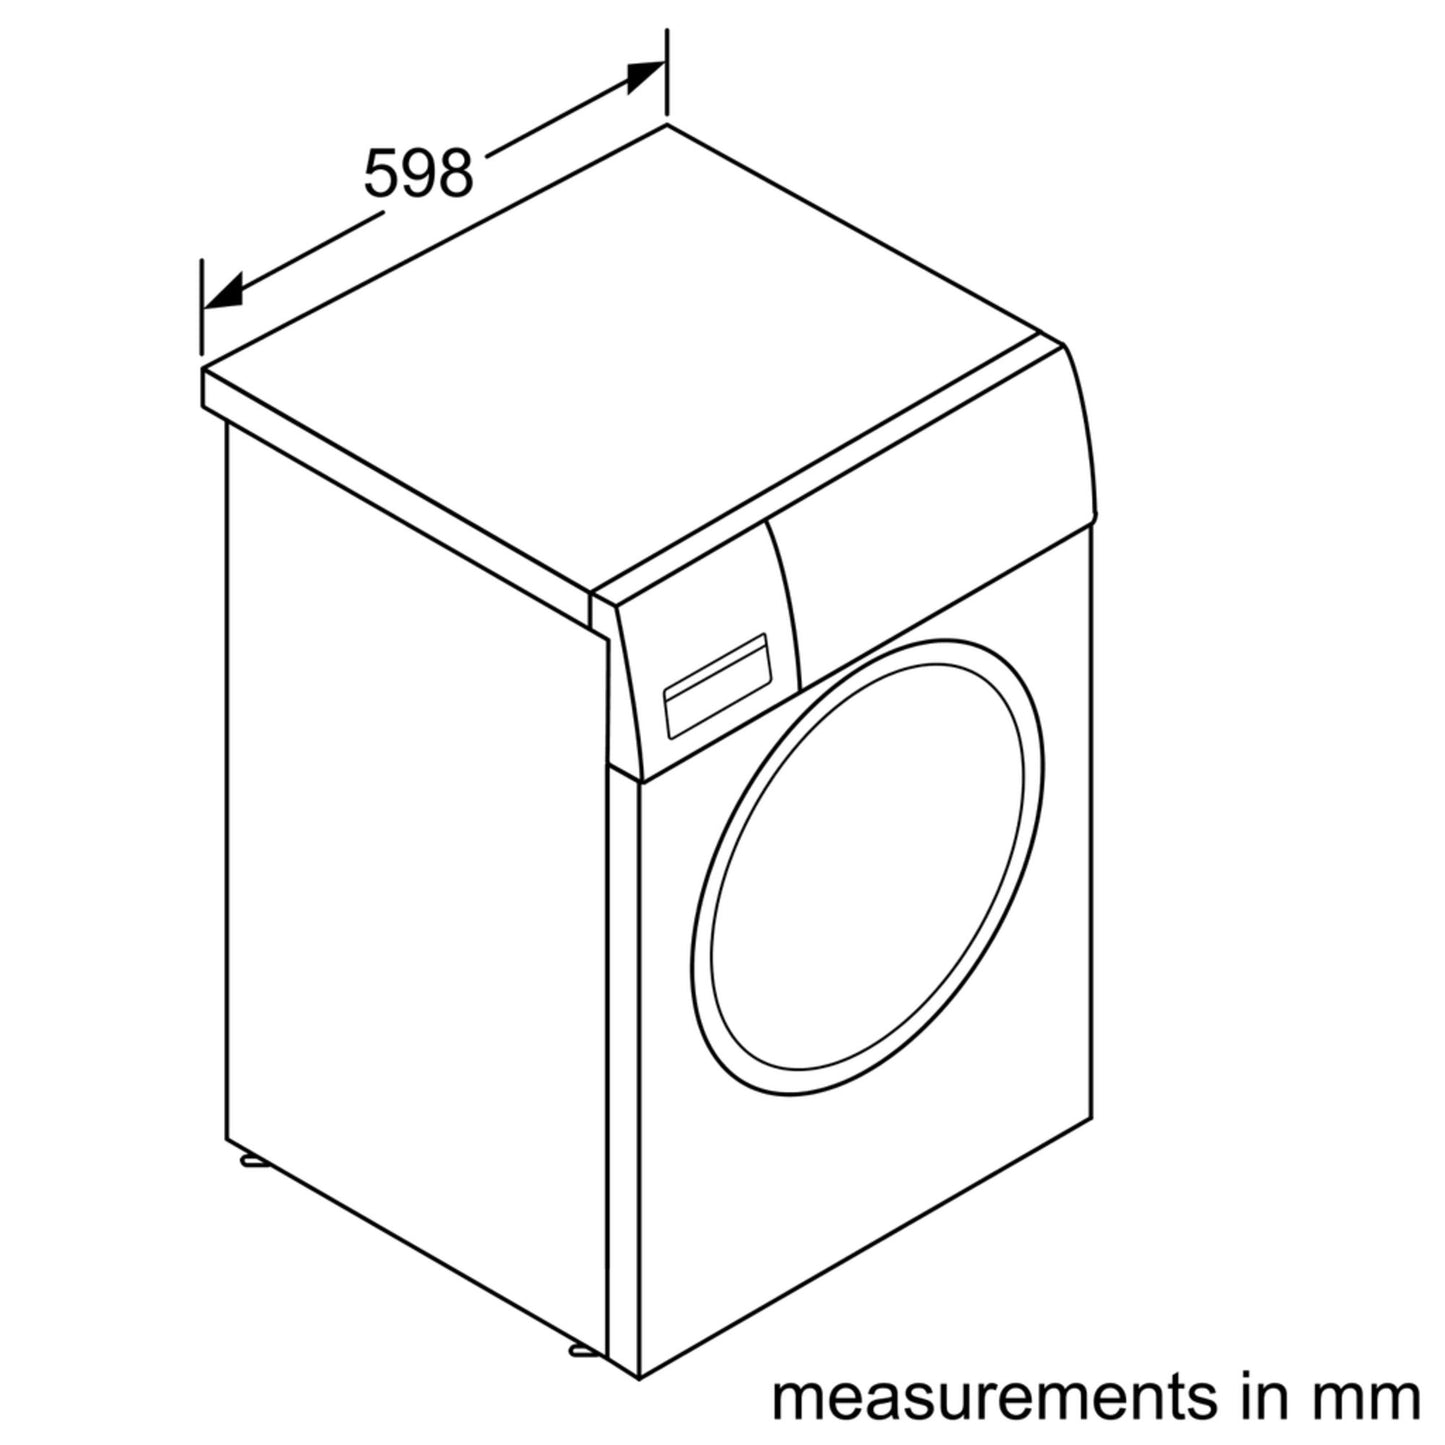 Bosch Frontloader Washing Machine 8 kg -  Inox-easyclean - Serie 4 - WAK2426SZA - Artisans Trade Depot